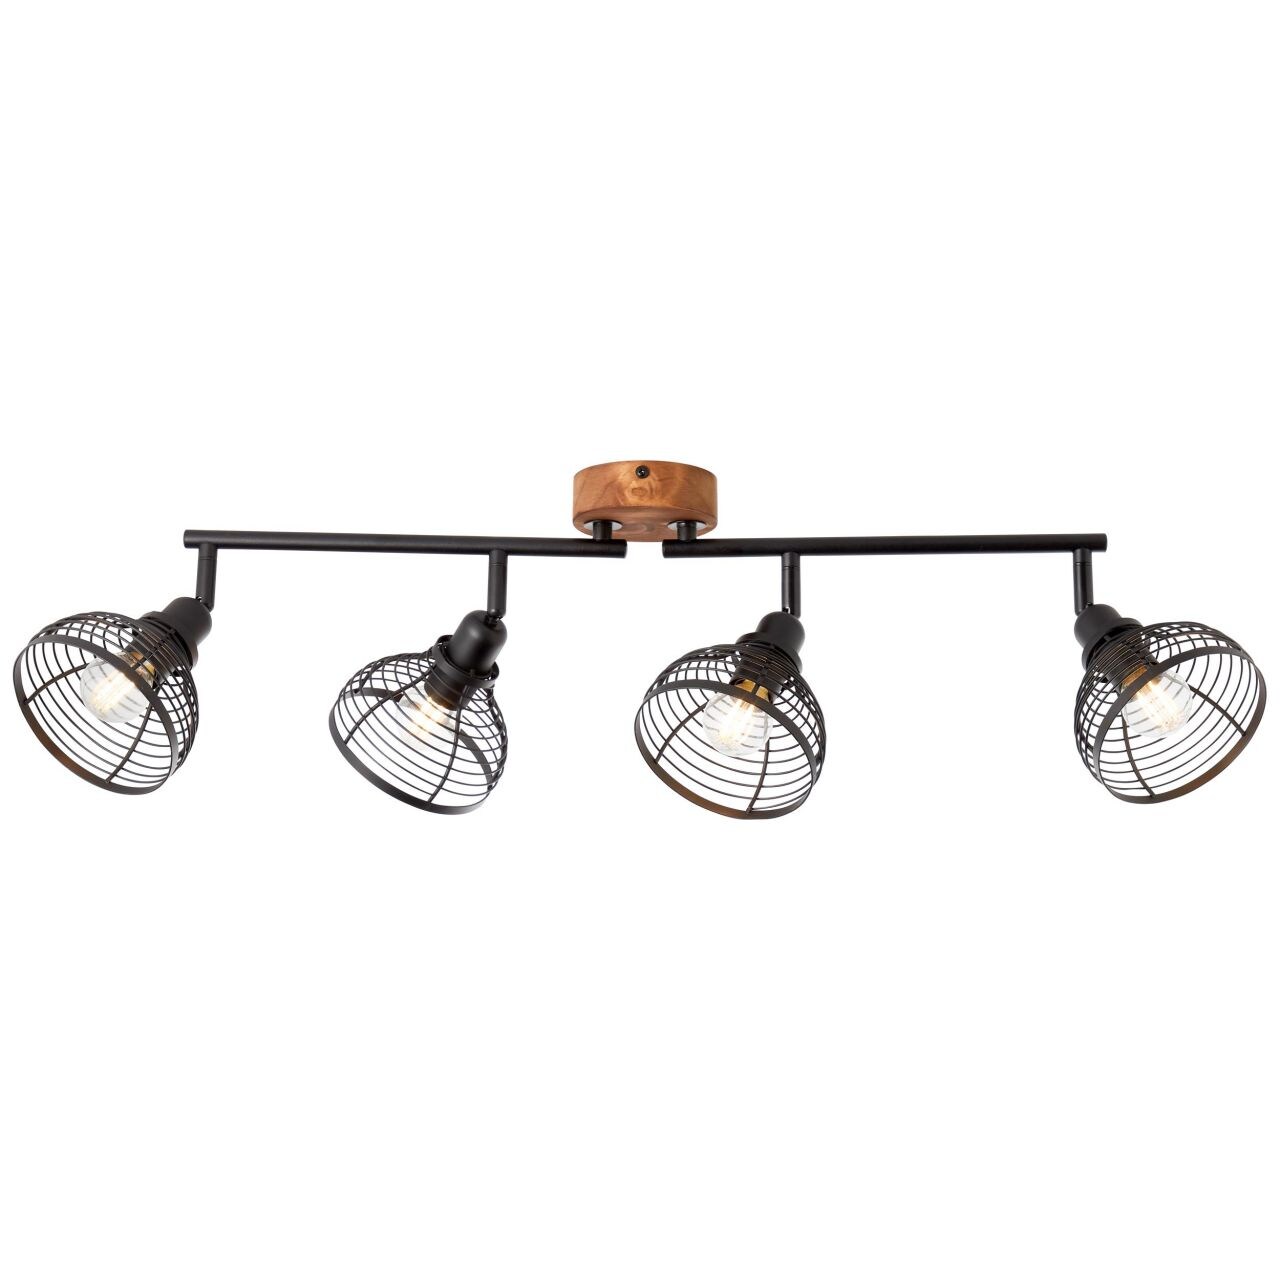 BRILLIANT Lampe, Avia Spotrohr 4flg schwarz/holzfarbend, Metall/Holz, 4x D45, E14, 40W,Tropfenlampen (nicht enthalten)